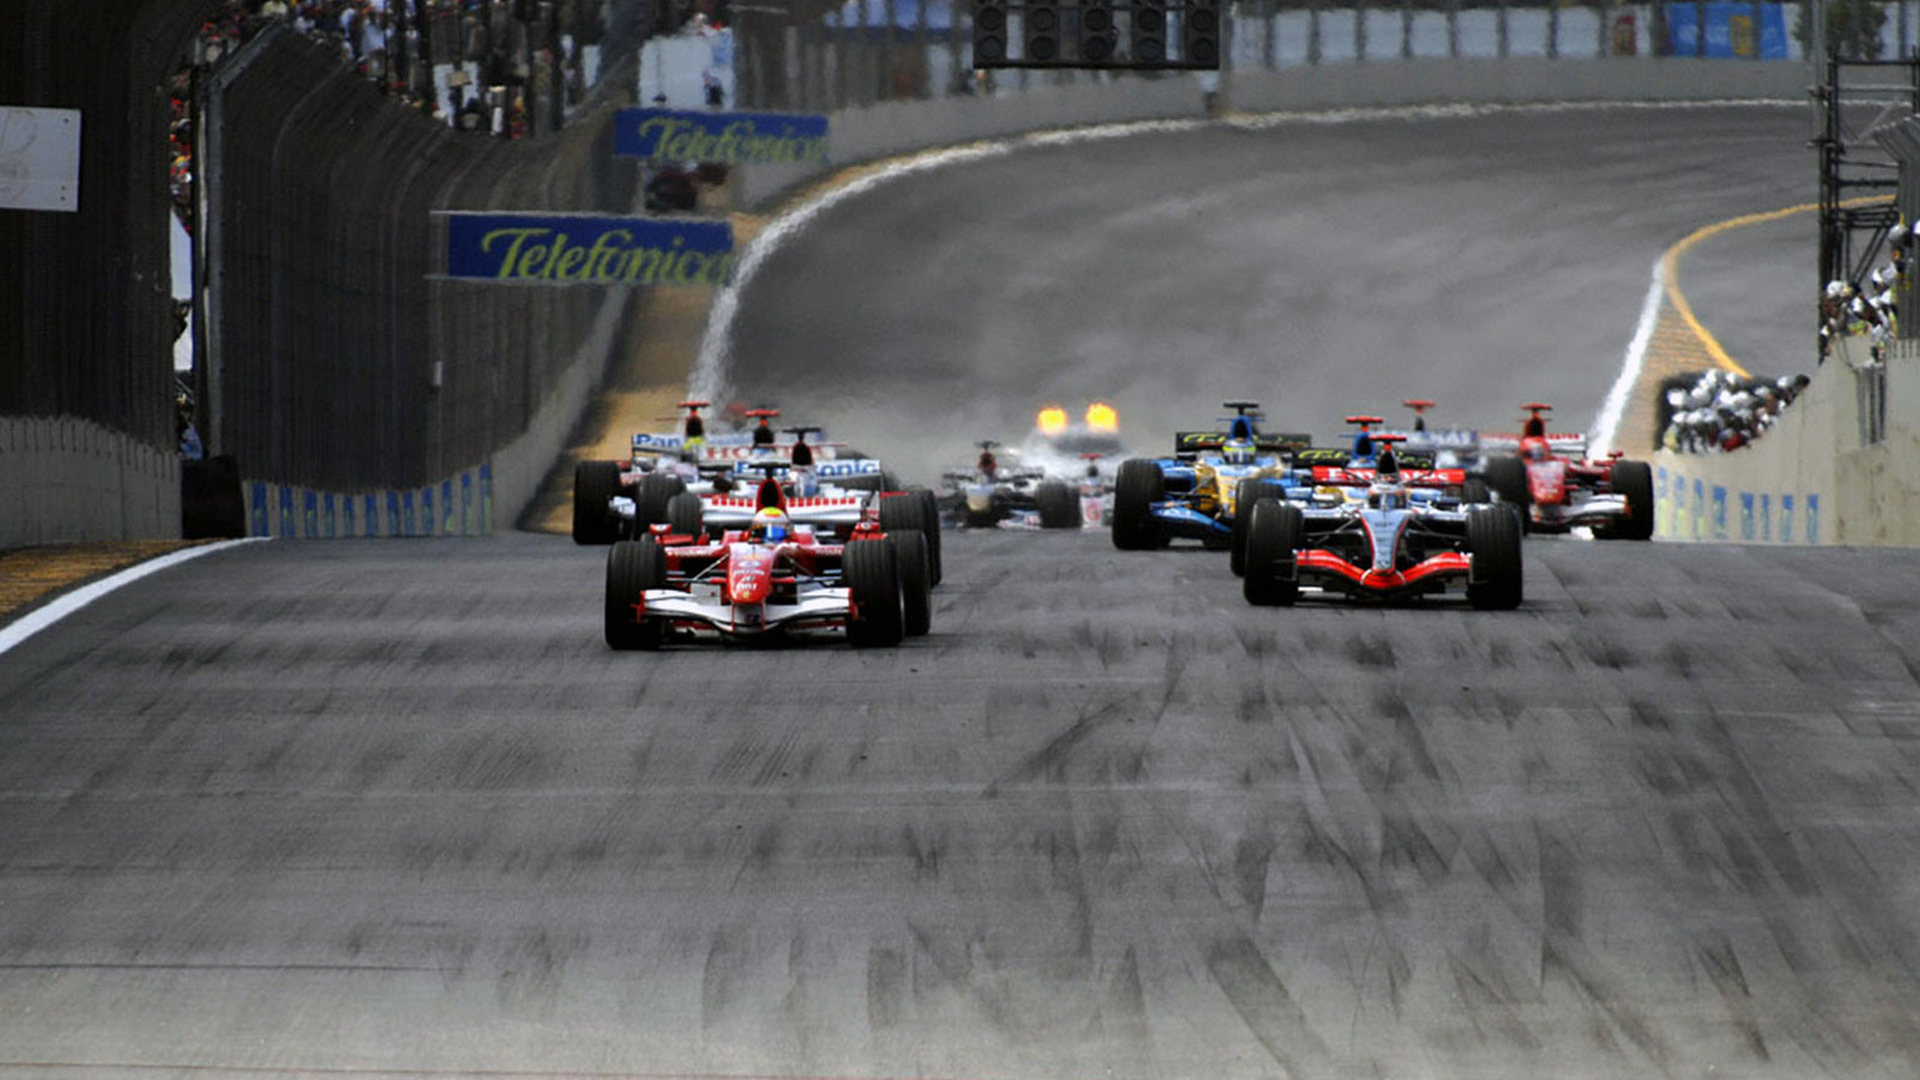 HD Wallpapers 2006 Formula 1 Grand Prix of Brazil | F1-Fansite.com